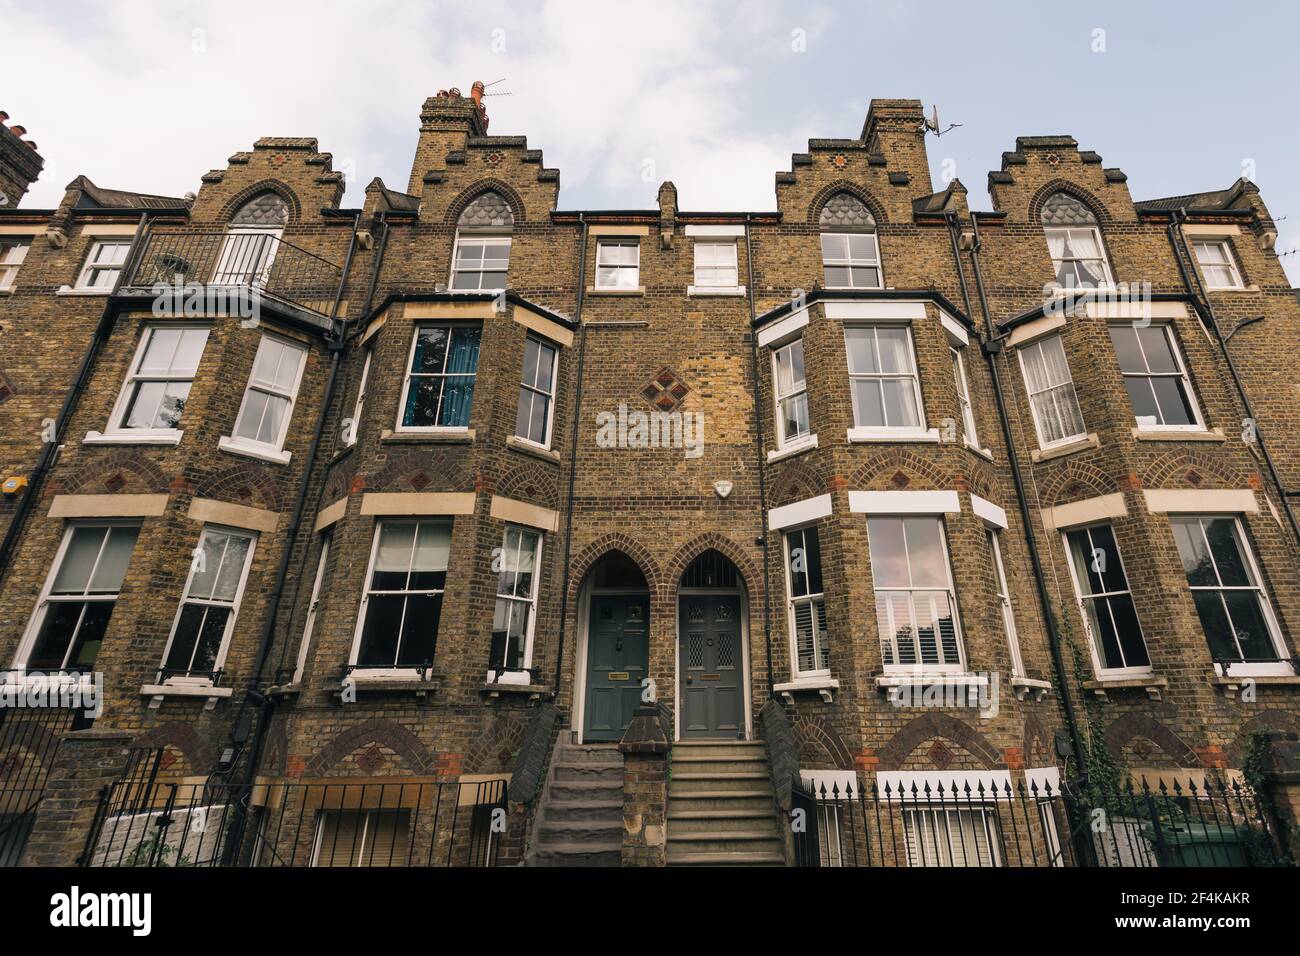 London traditional architecture, England Stock Photo - Alamy